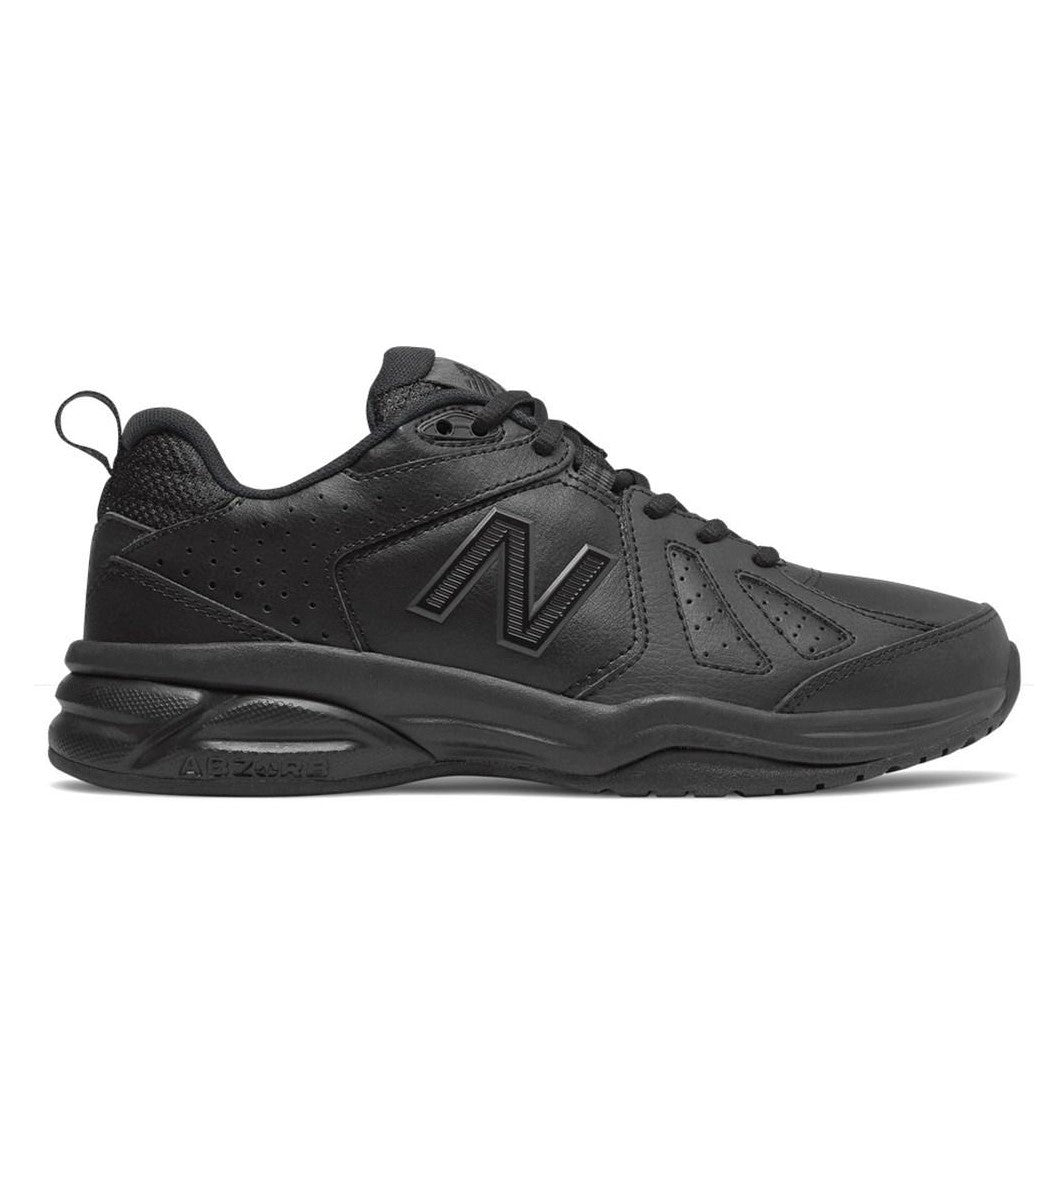 New Balance Women's 624v5 Shoe Black